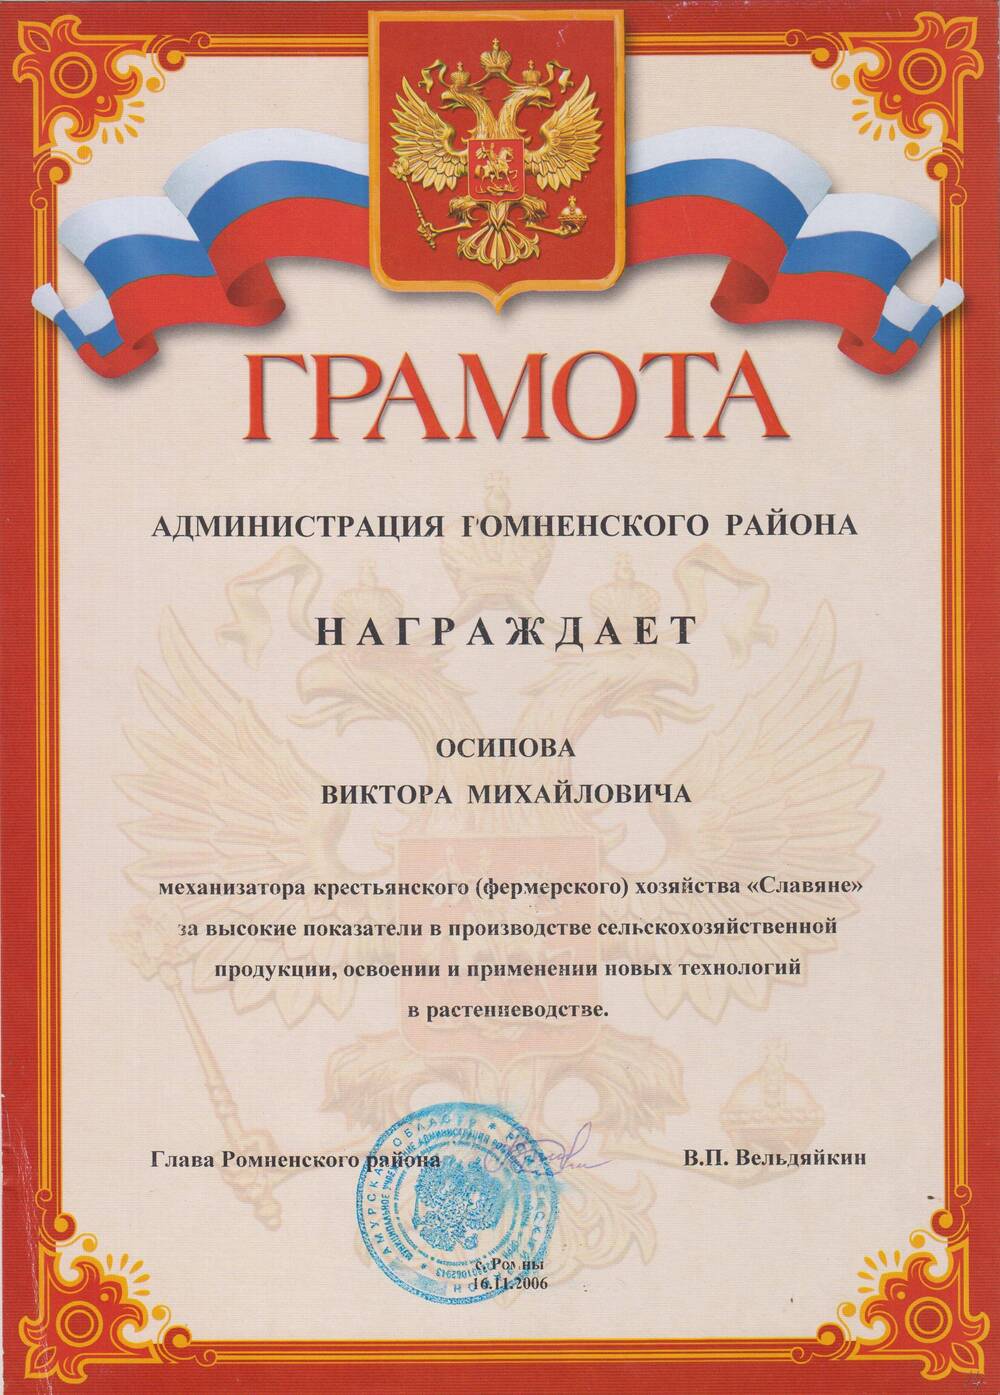 Грамота администрации Ромненского района Осипову Виктору Михайловичу